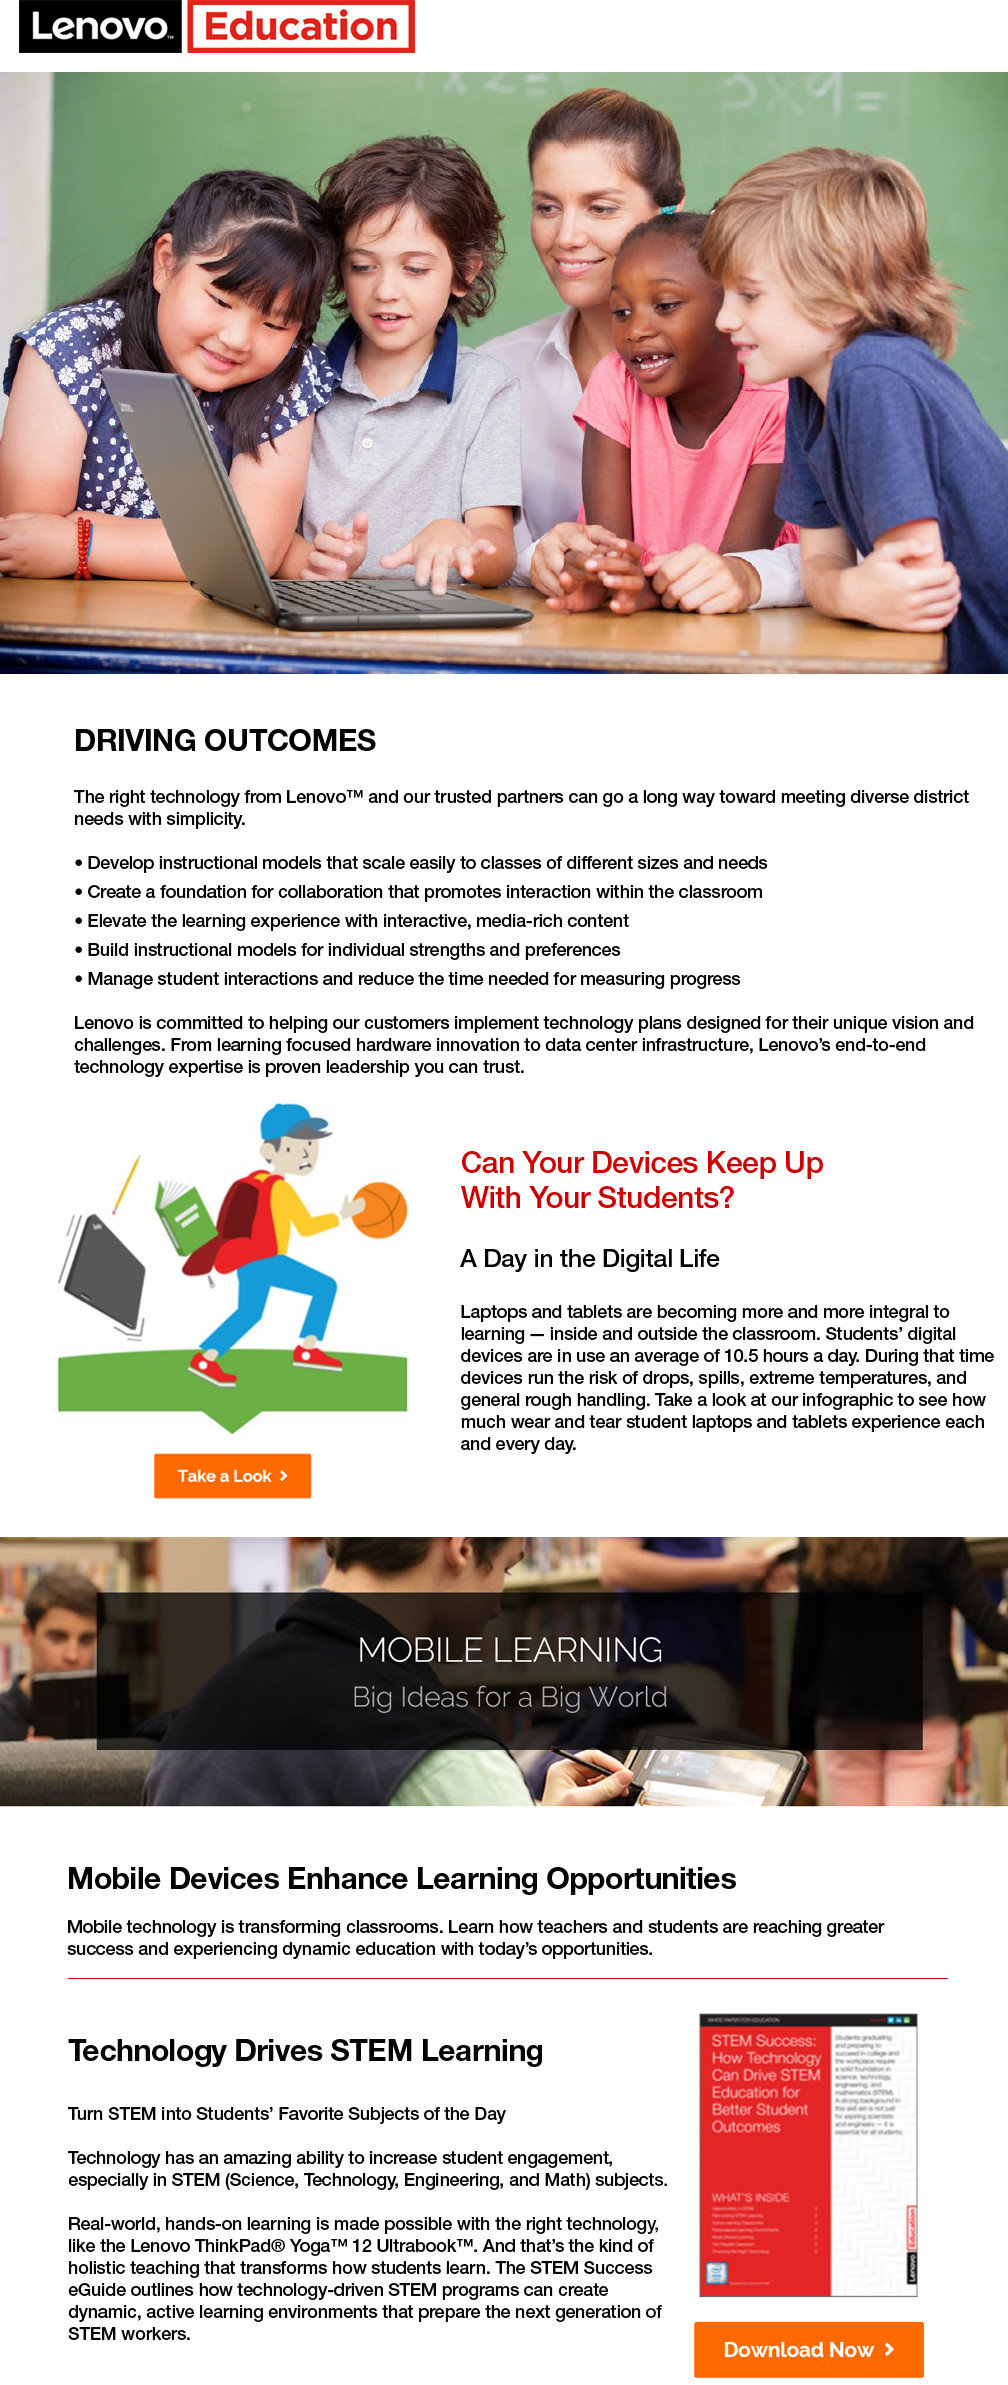 Lenovo Education - Driving Outcomes